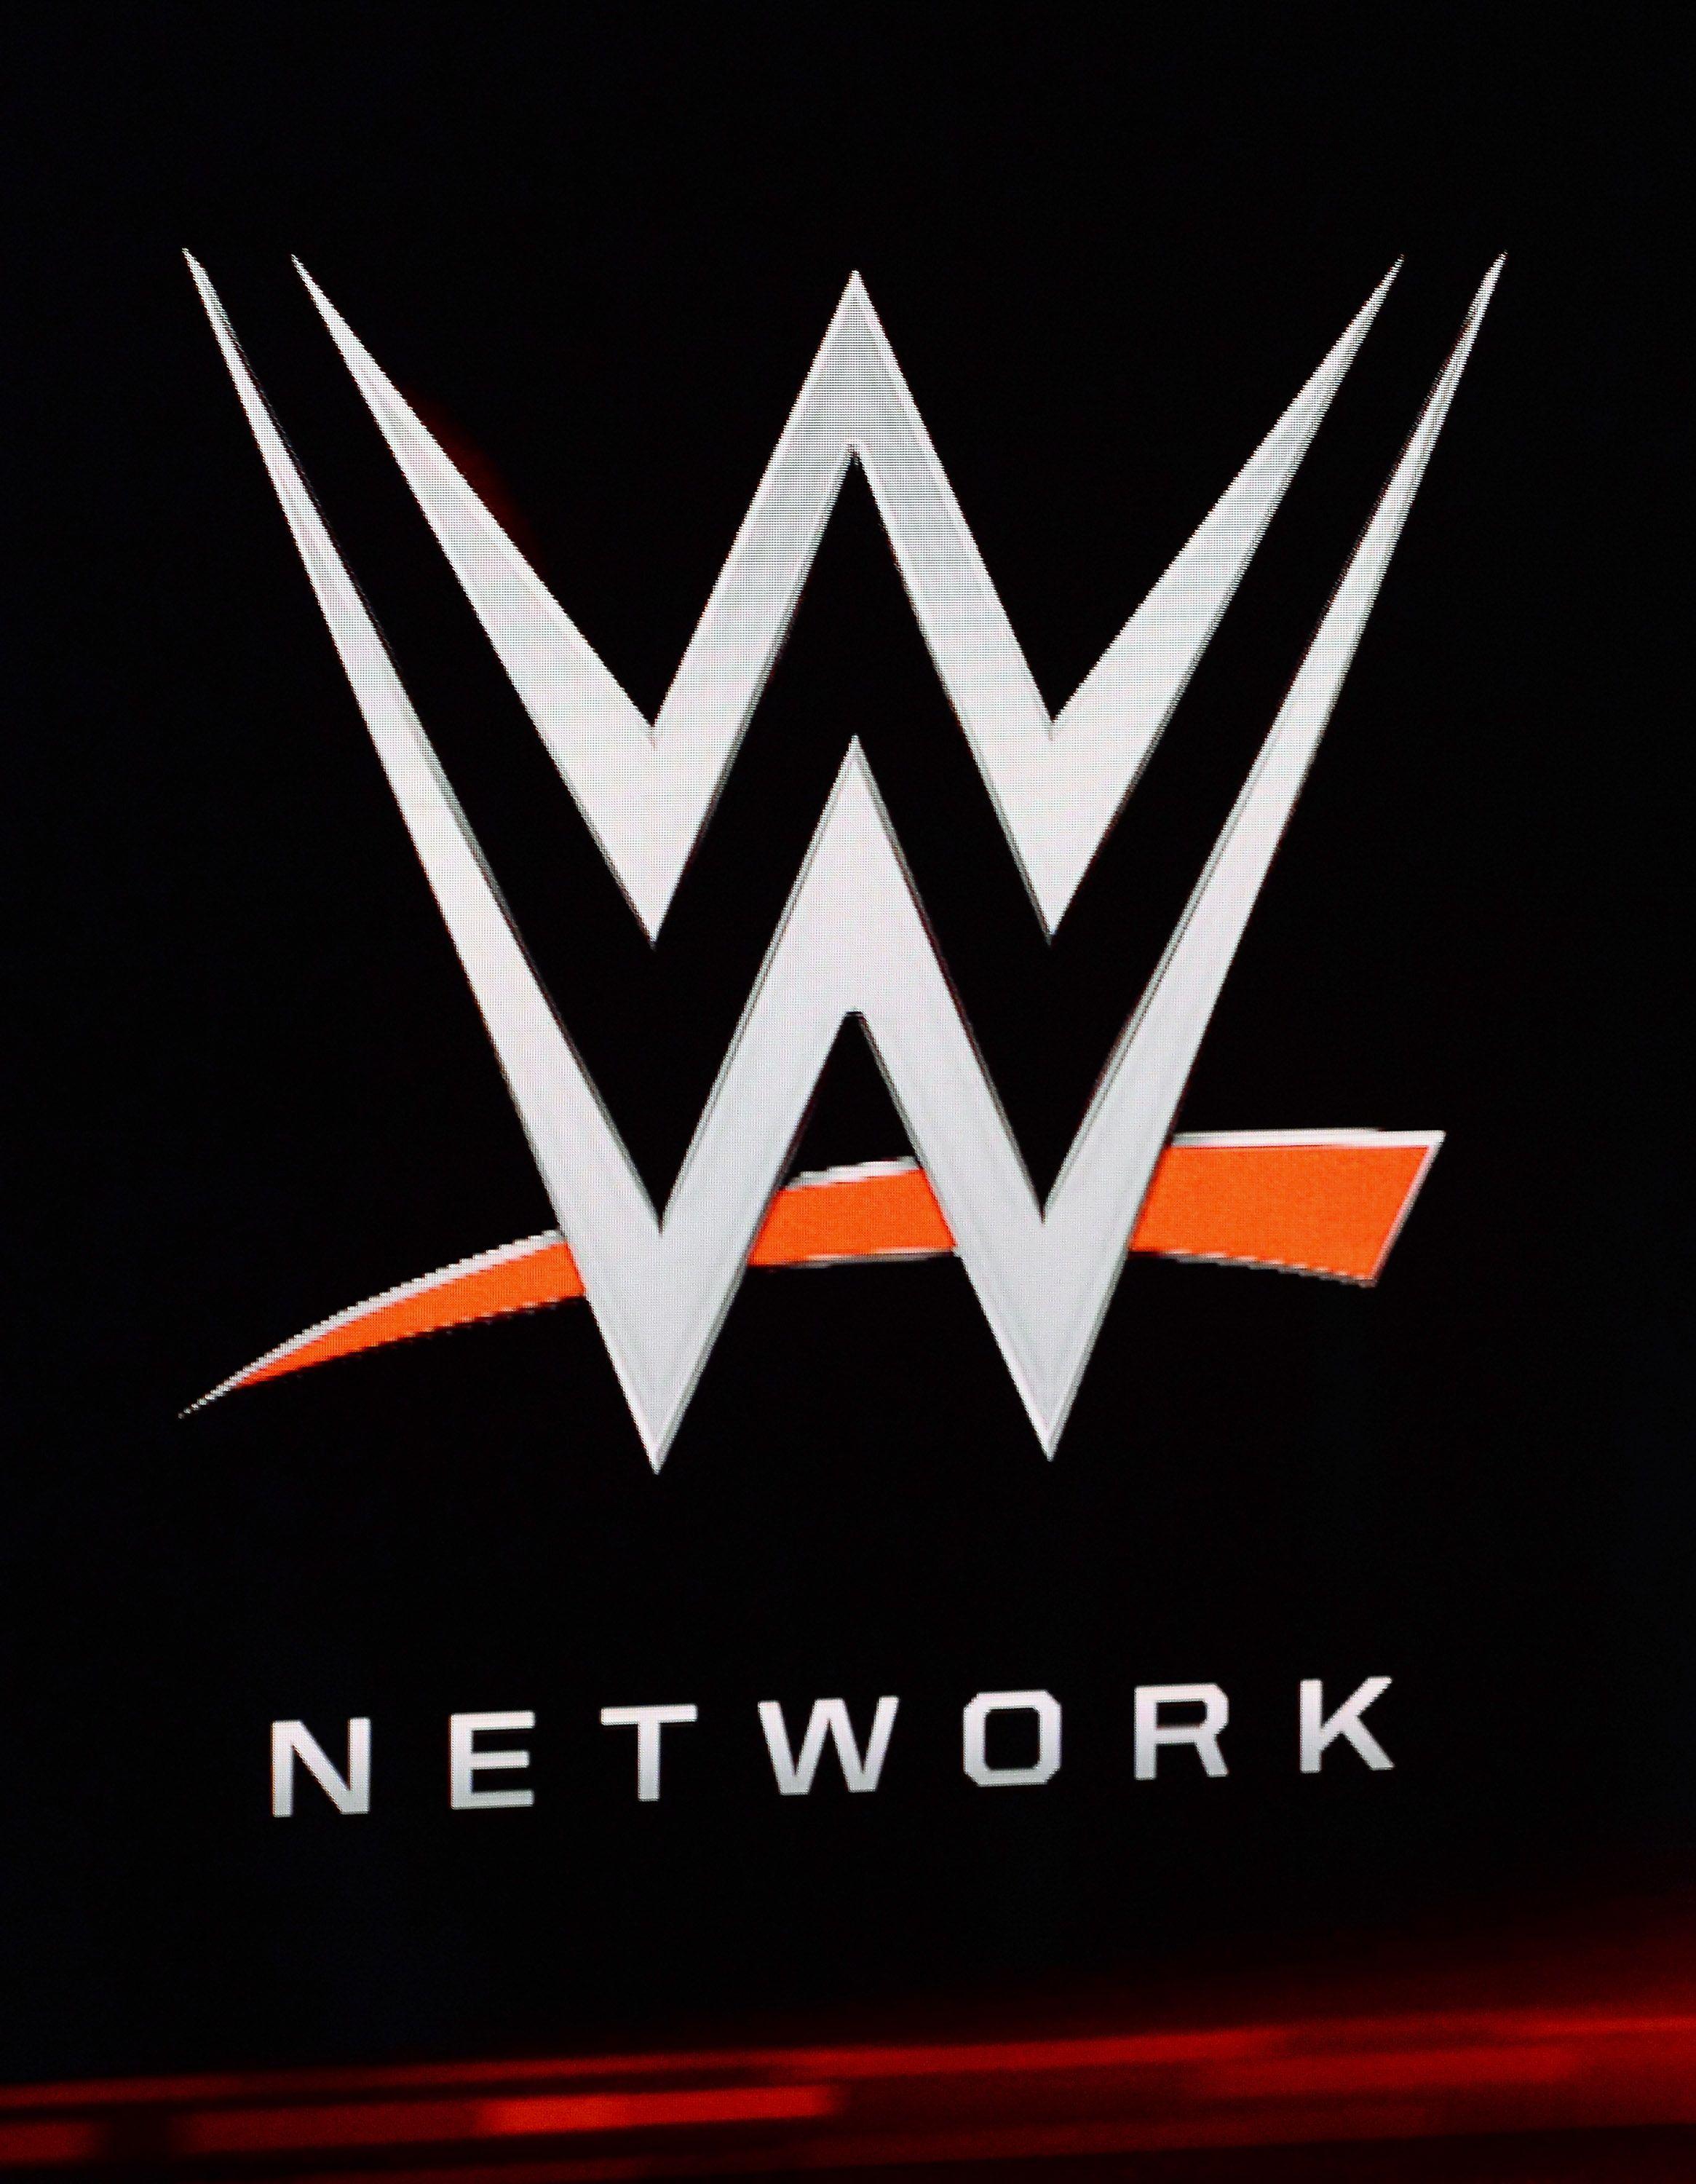 Wwe.com Logo - Investors Body Slam WWE Wrestling Network